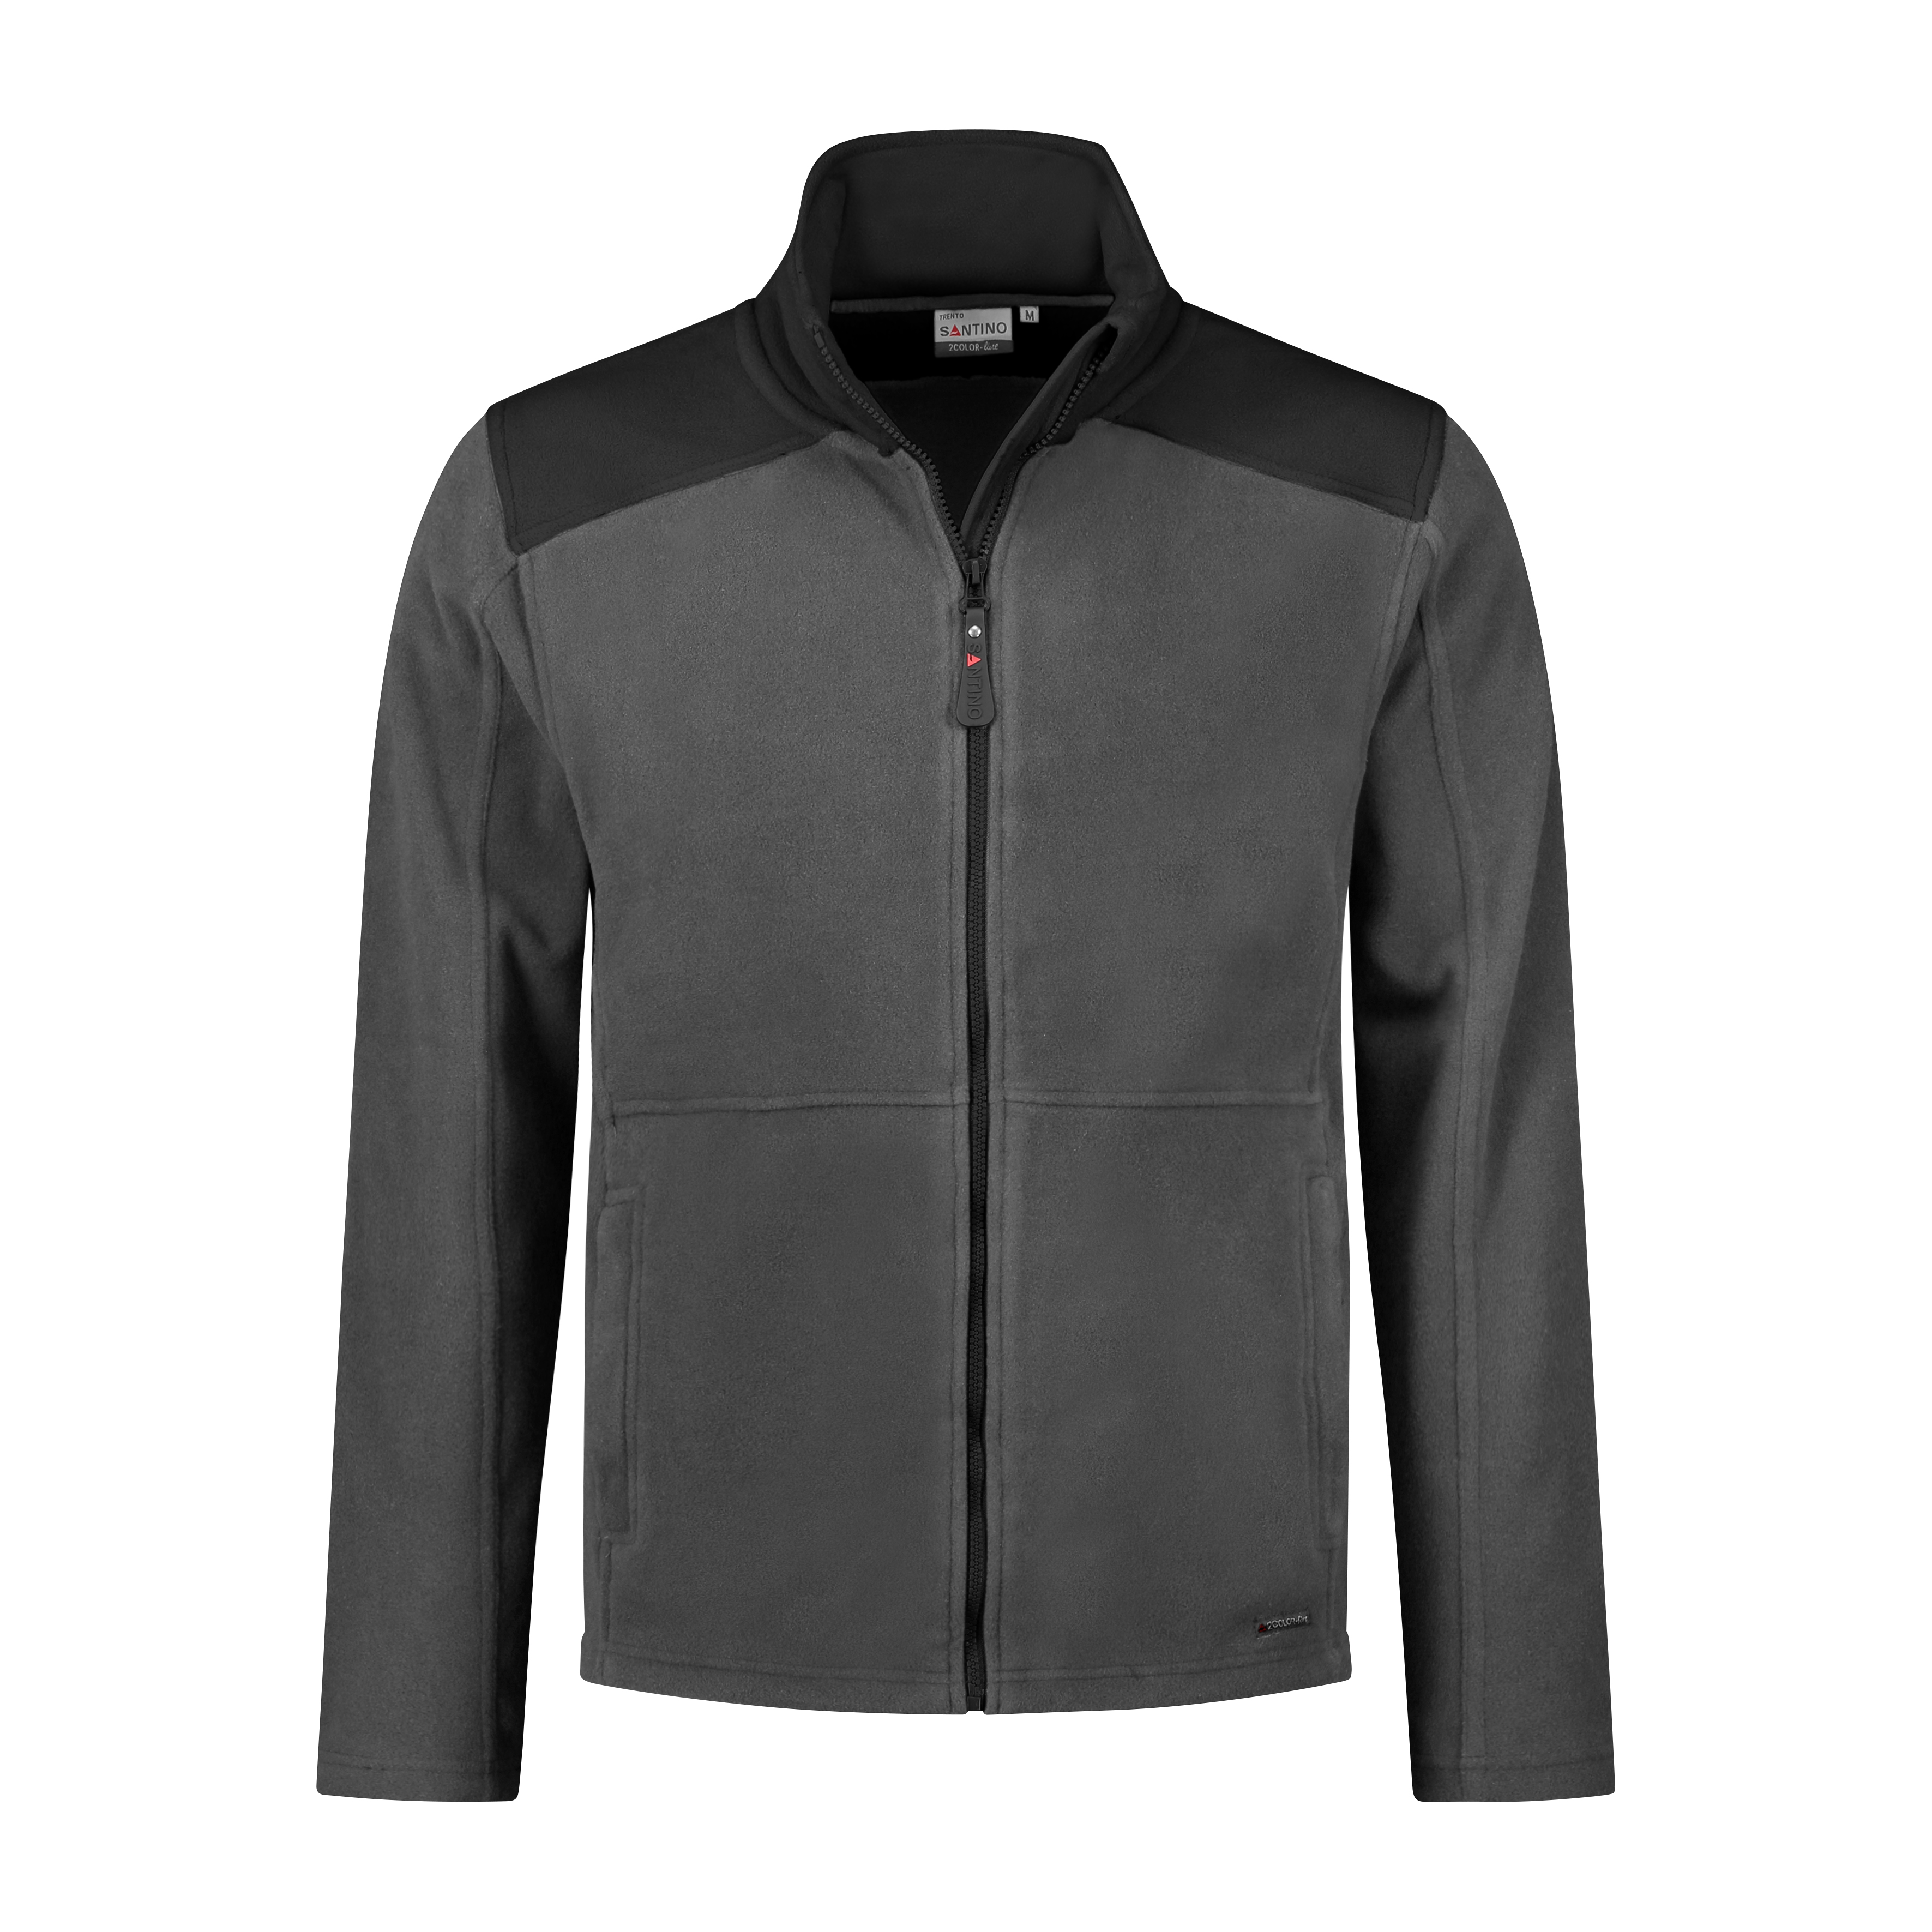 2-Color Fleece jacket TRENTO - front